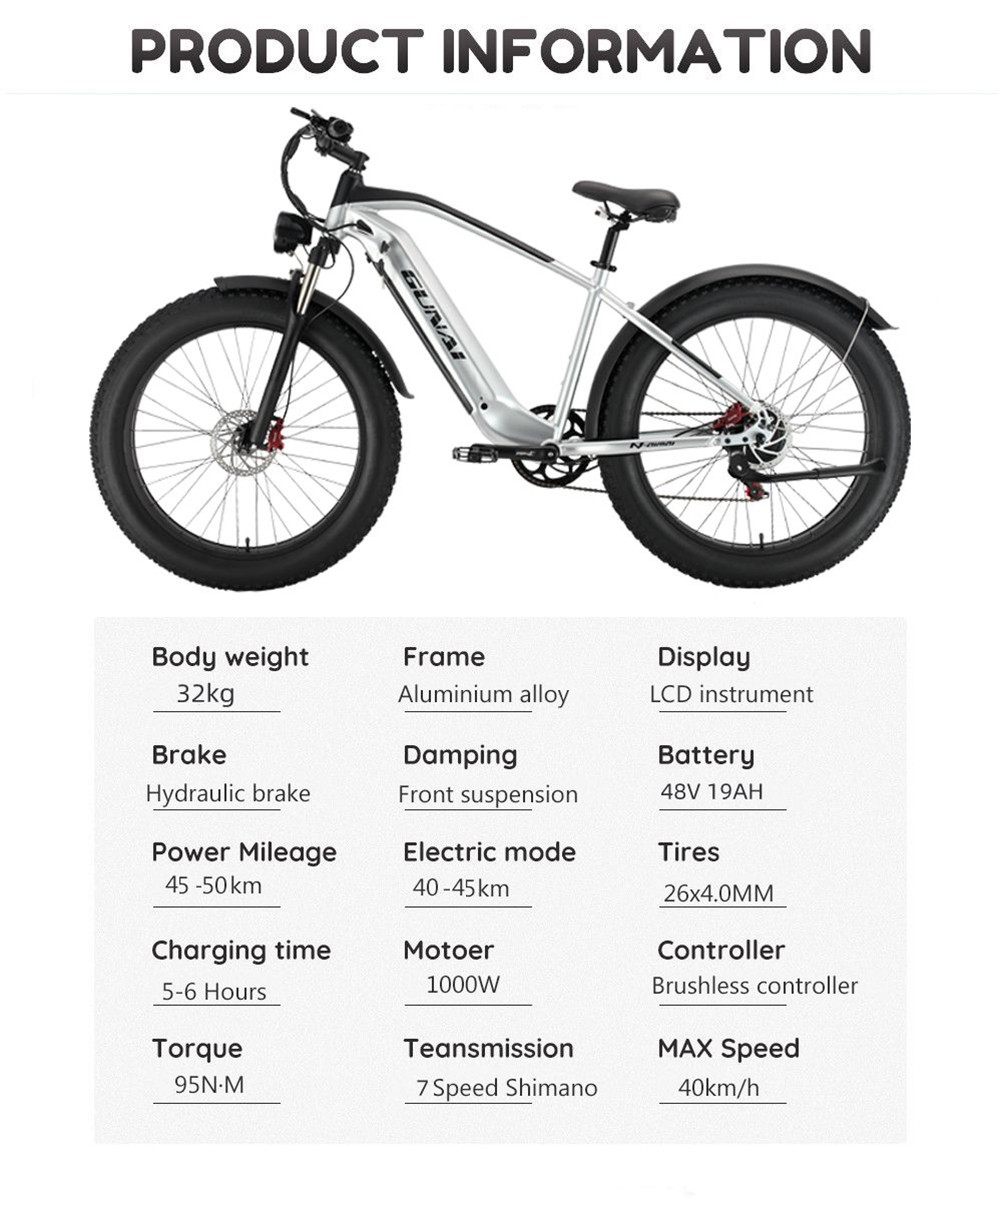 https://img.gkbcdn.com/s3/d/202211/GUNAI-MX05-26-4-0-inch-Fat-Tire-Electric-Moped-Bike-518466-9.jpg